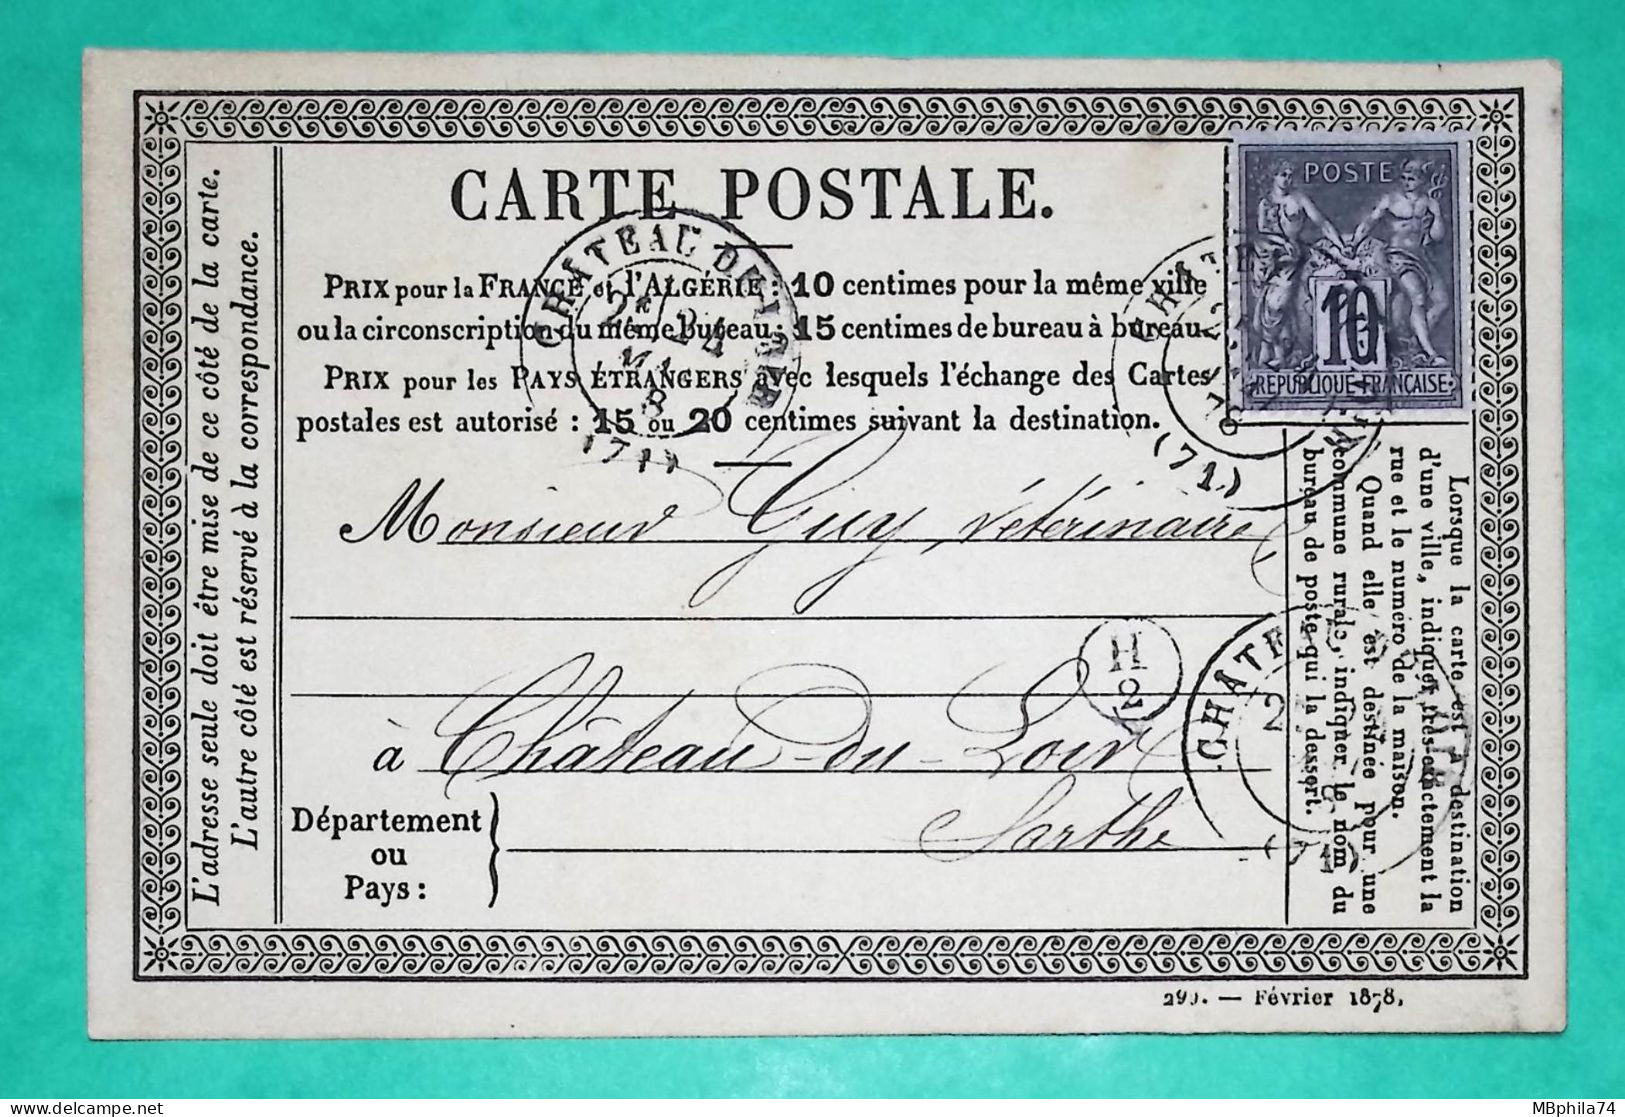 N°89 SAGE CARTE PRECURSEUR CHATEAU DU LOIR SARTHE BOITE RURALE SUPPLEMENTAIRE H2 A IDENTIFIER CORRESPONDANCE LOCALE 1878 - Bahnpost